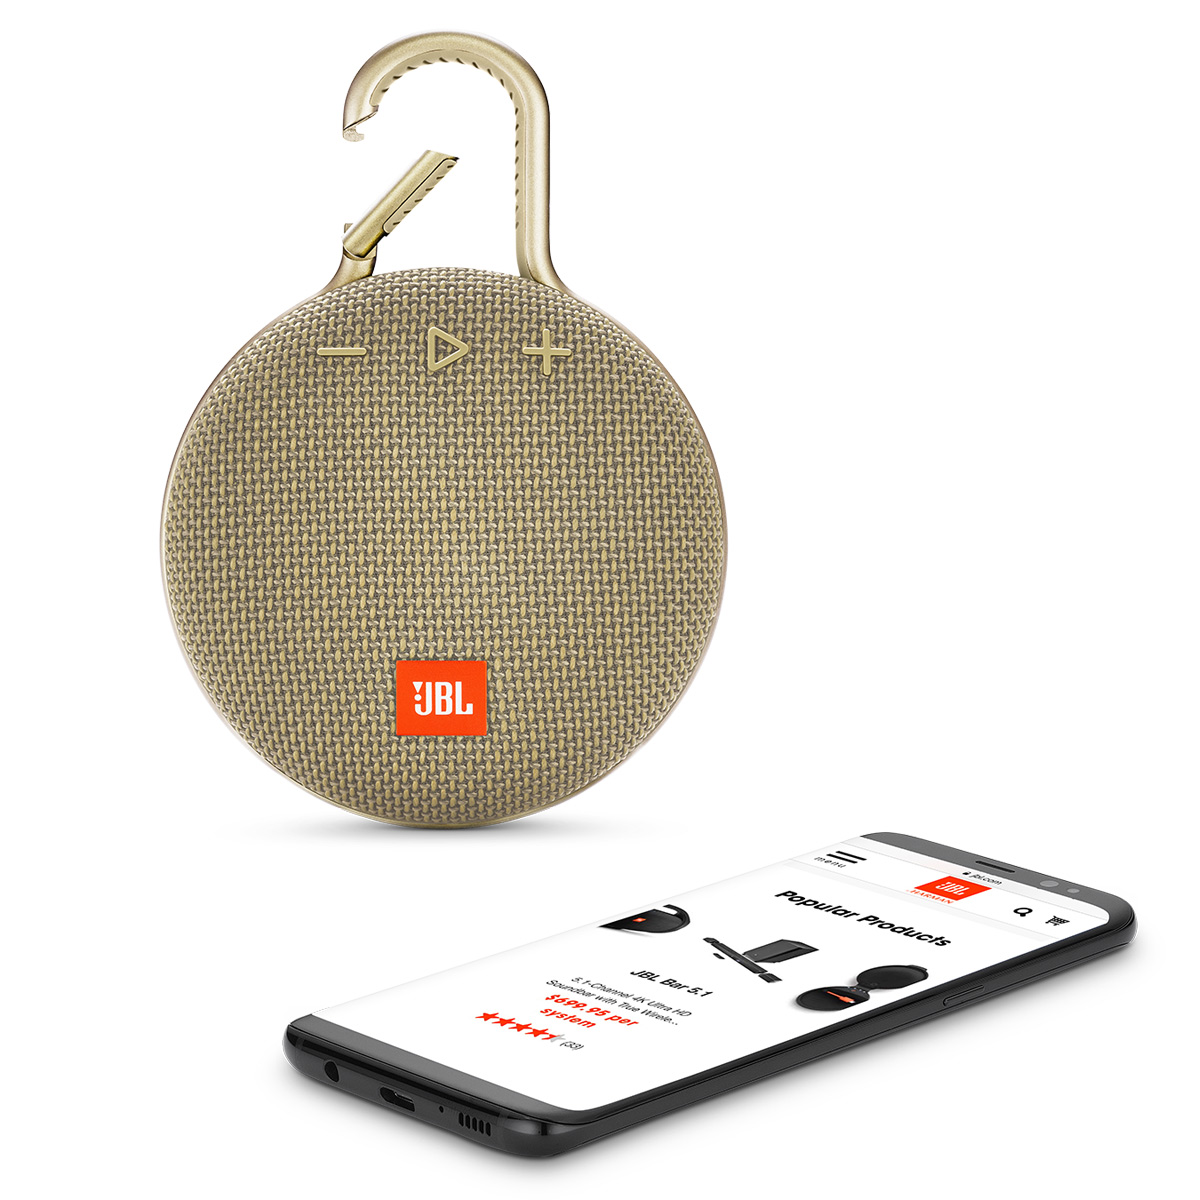 JBL Clip 3 Portable Bluetooth Waterproof Speaker - Sand - image 2 of 5